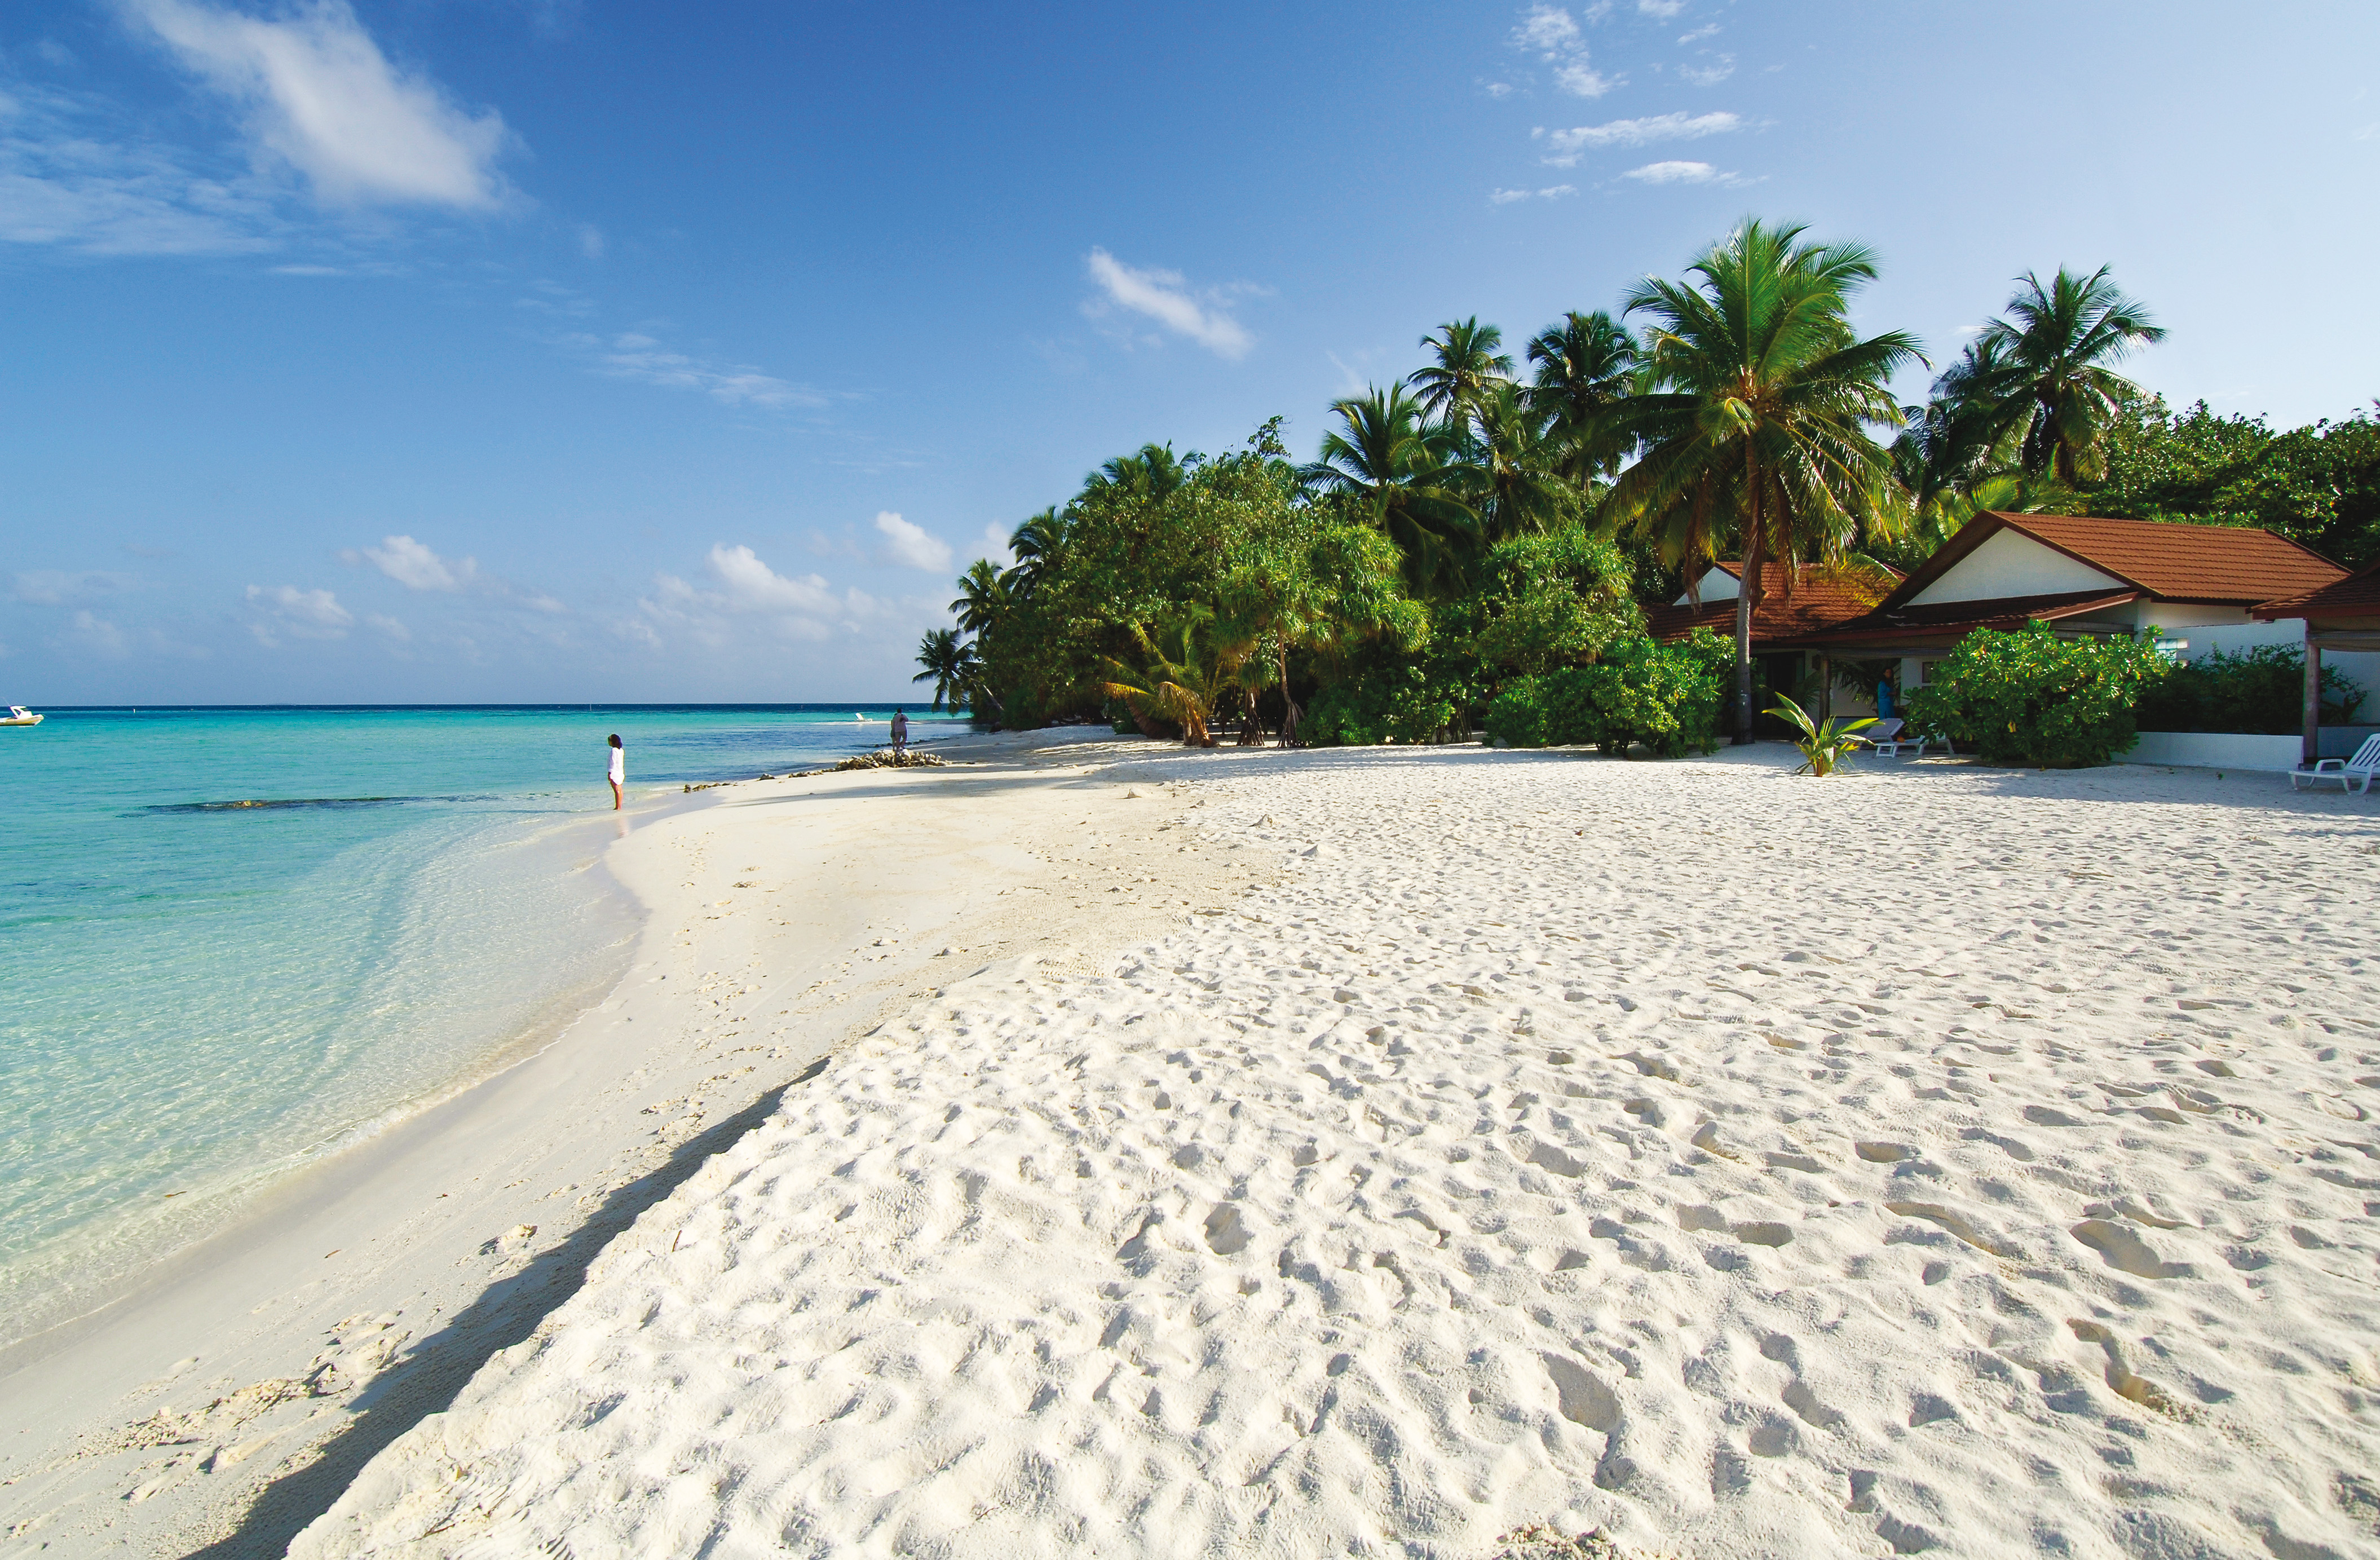 Island beach 2. Мальдивы Санд Айленд 5. Diamonds Athuruga 5. Diamonds Athuruga Maldives 5. Остров Кокоа, Мальдивы.